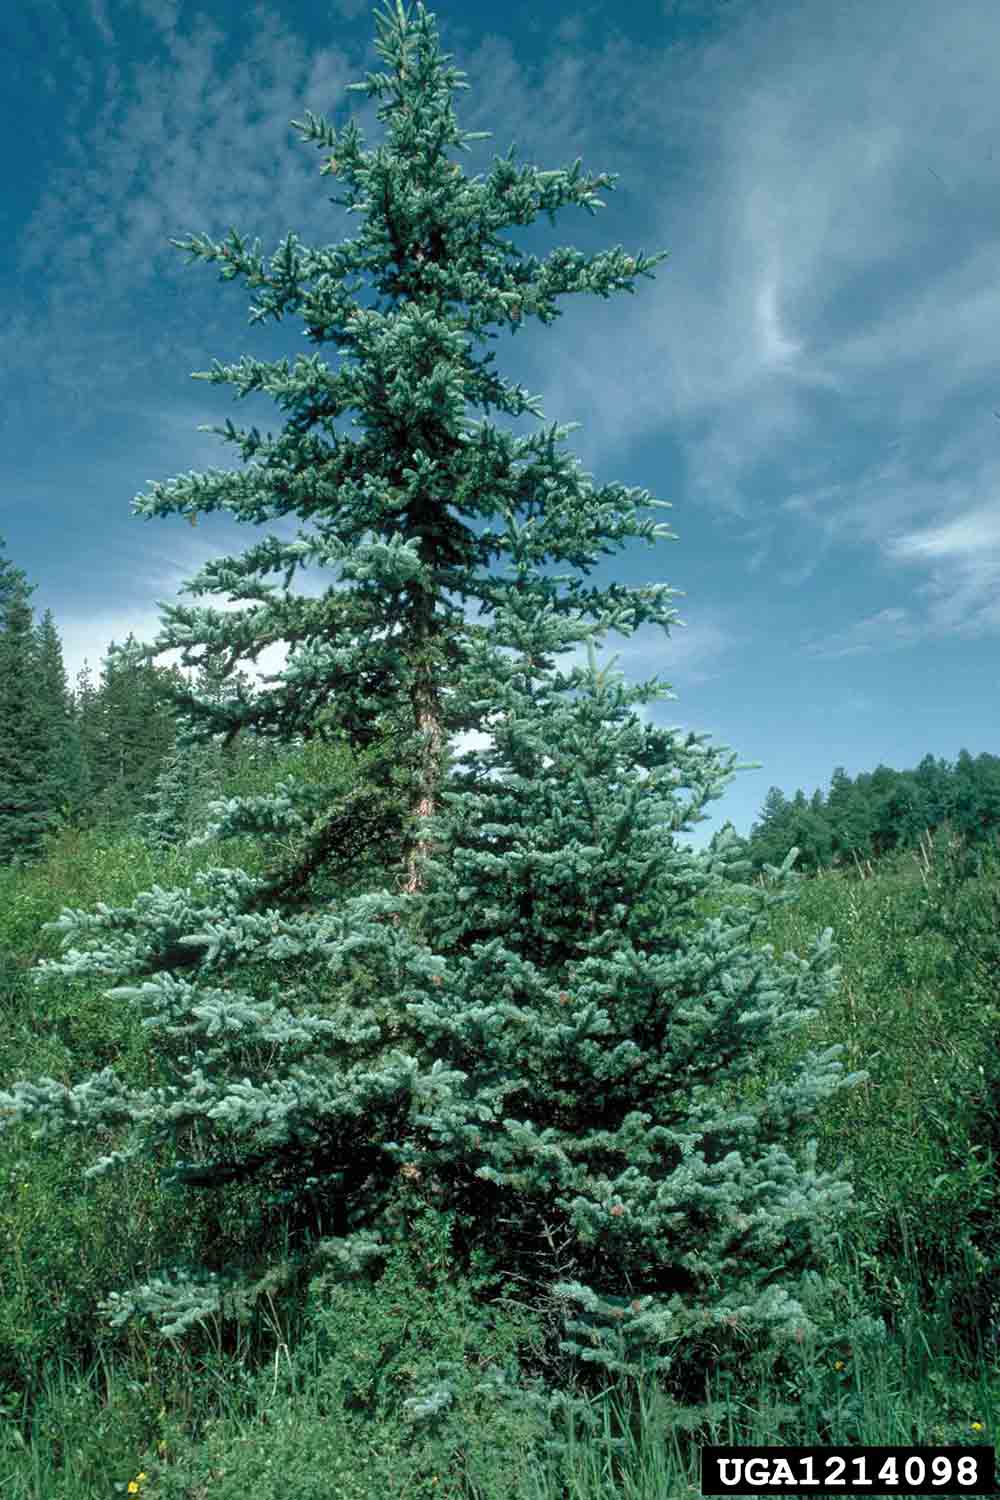 Blue spruce tree